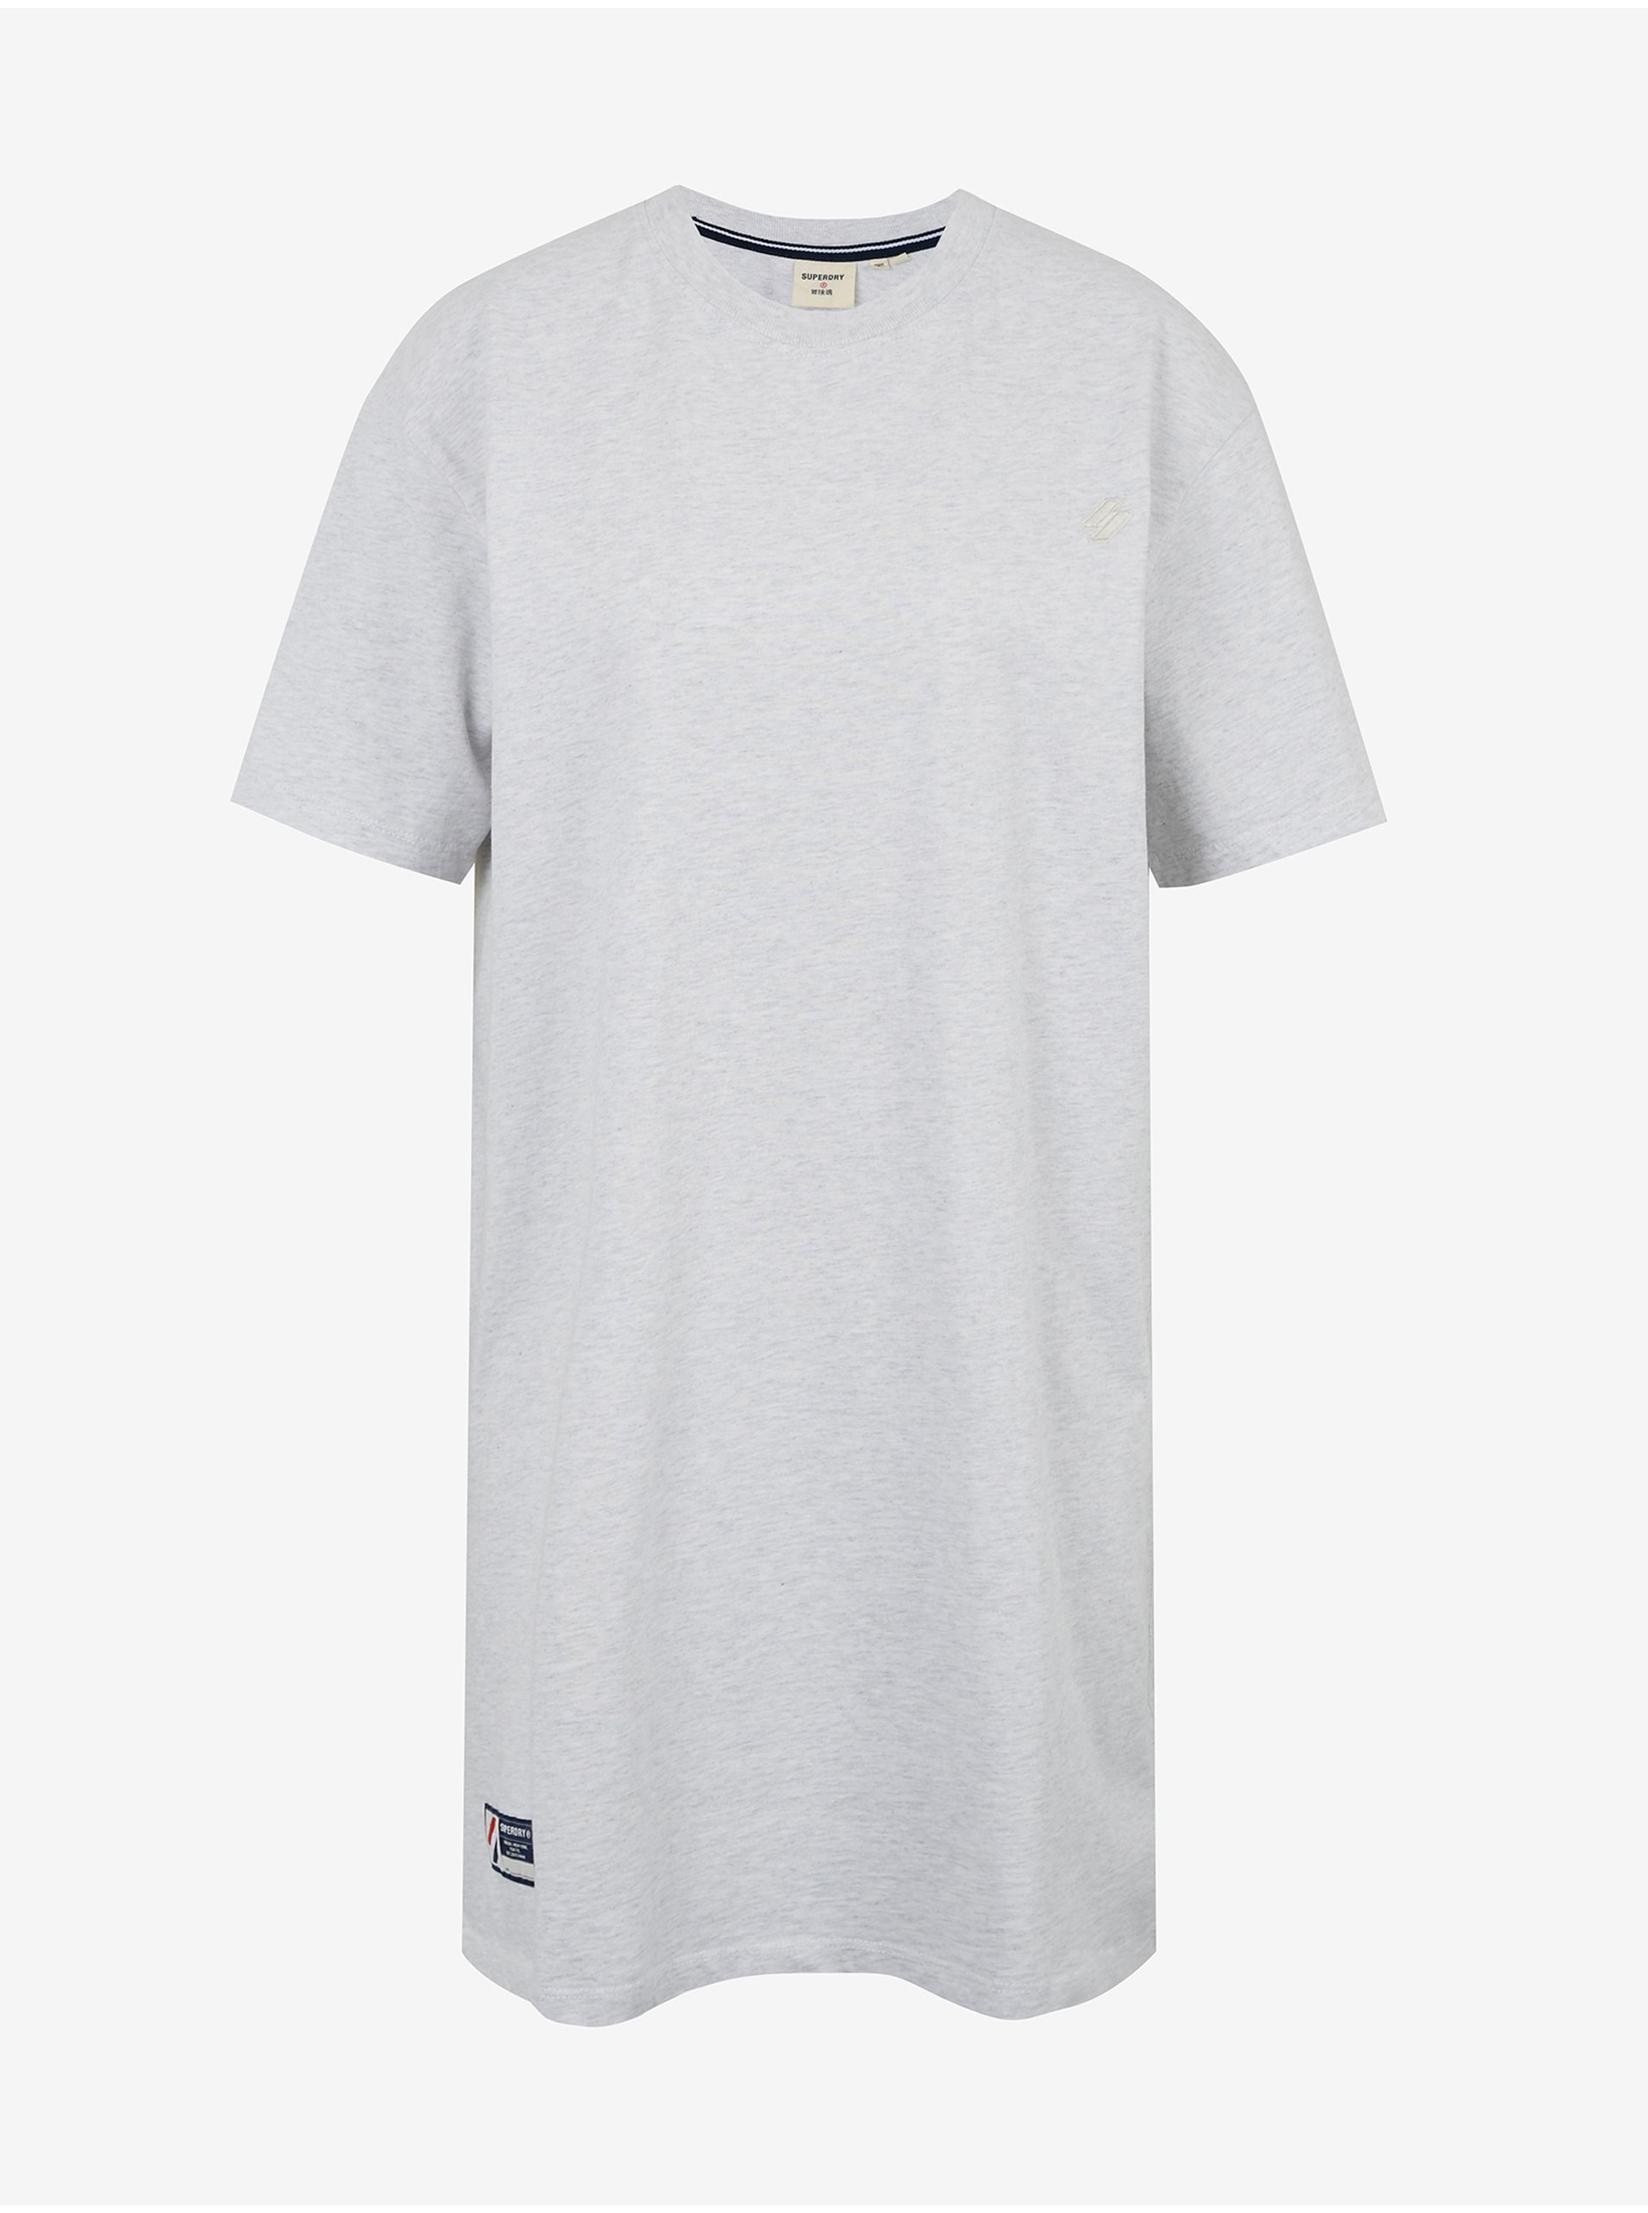 Selected image for SUPERDRY Ženska T-Shirt haljina ravnog kroja svetlosiva